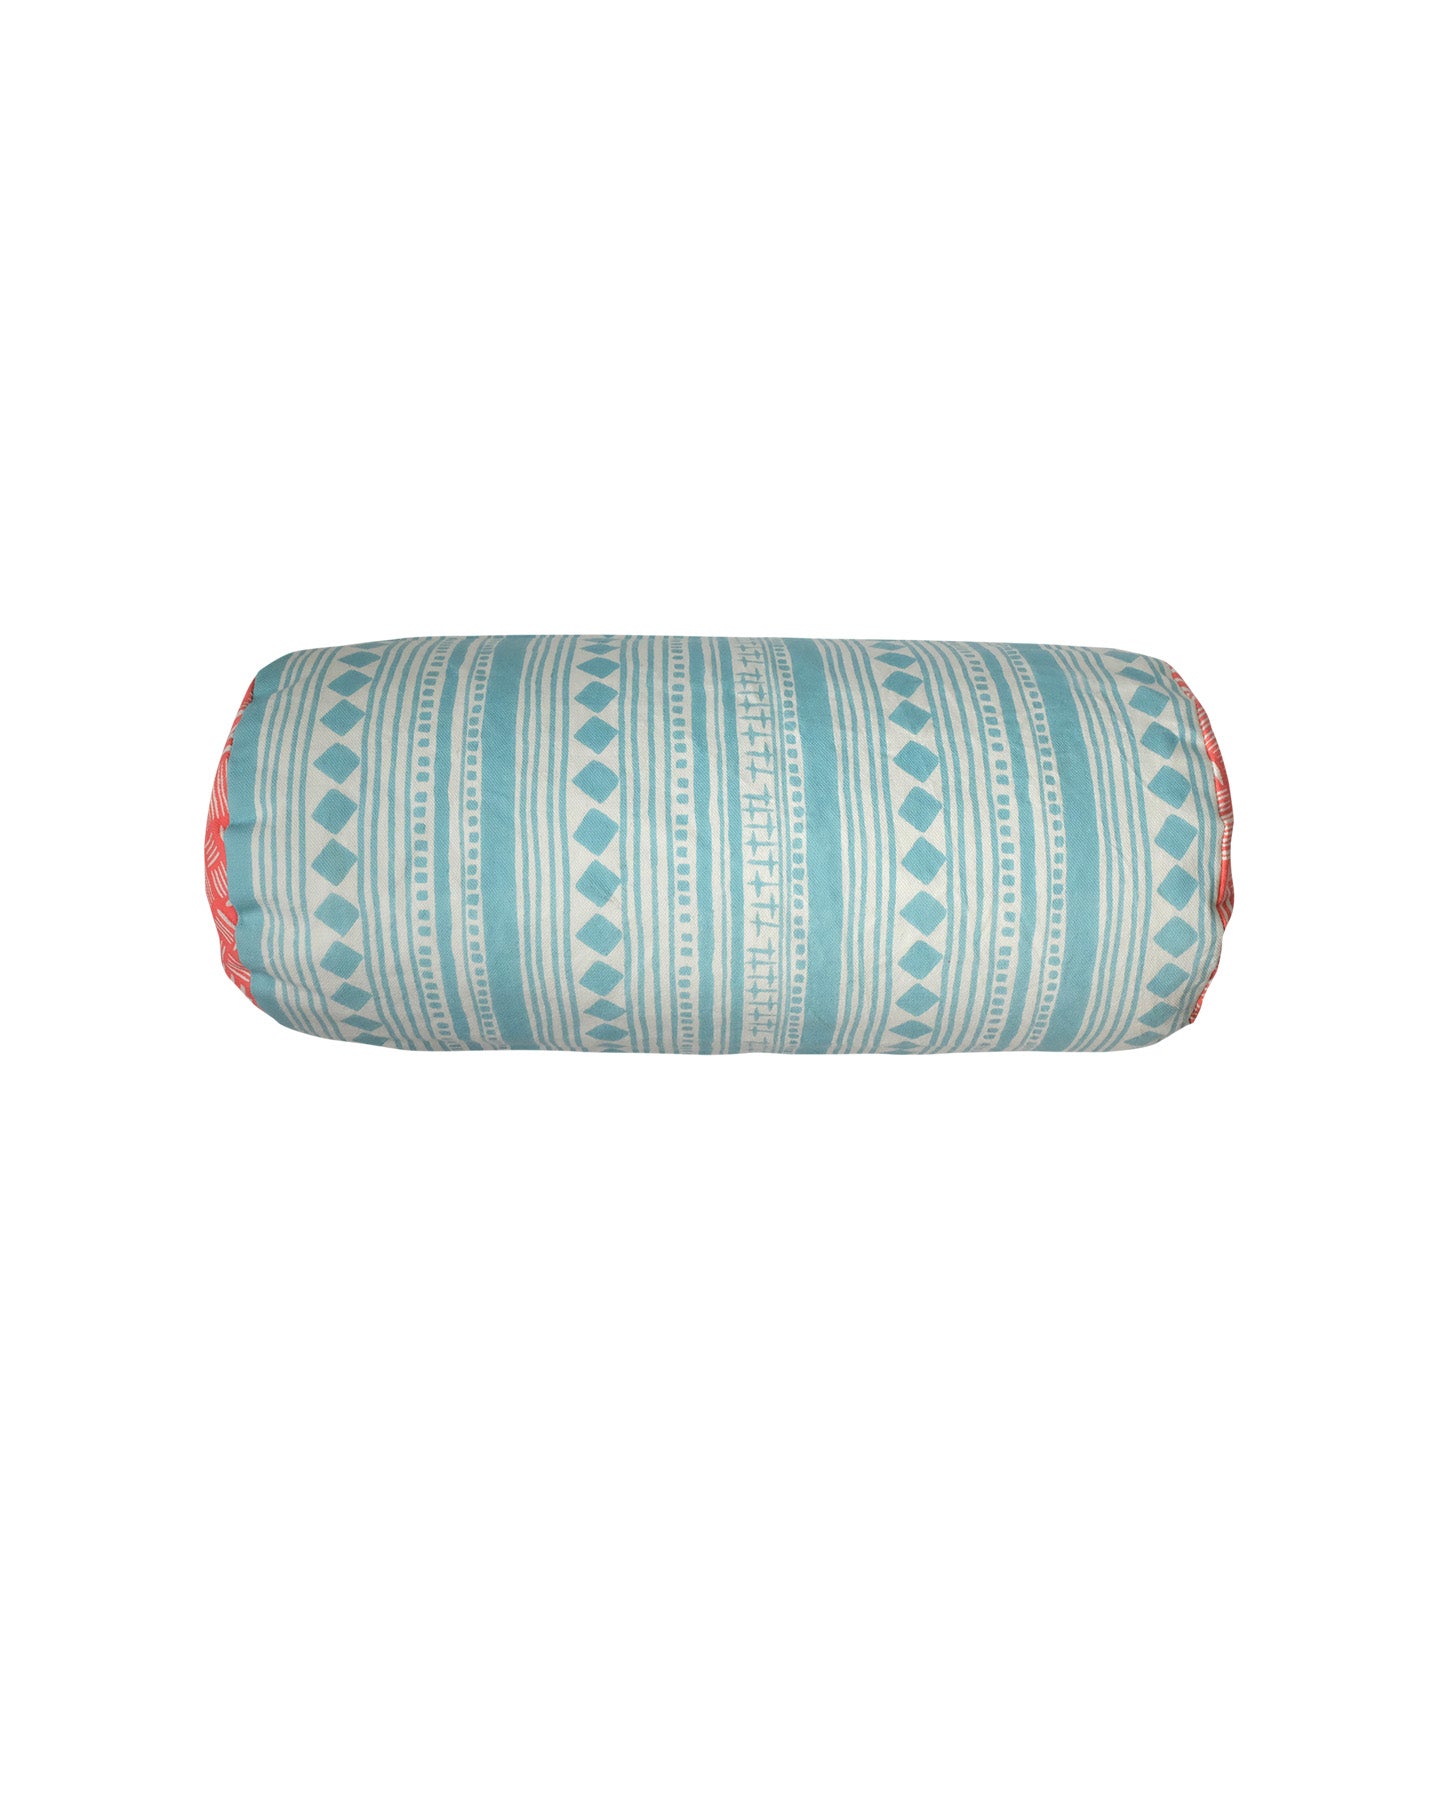 Aquamarine cabaret stripe and rose hash cotton short bolster 46 x 20cm-Humphries and Begg